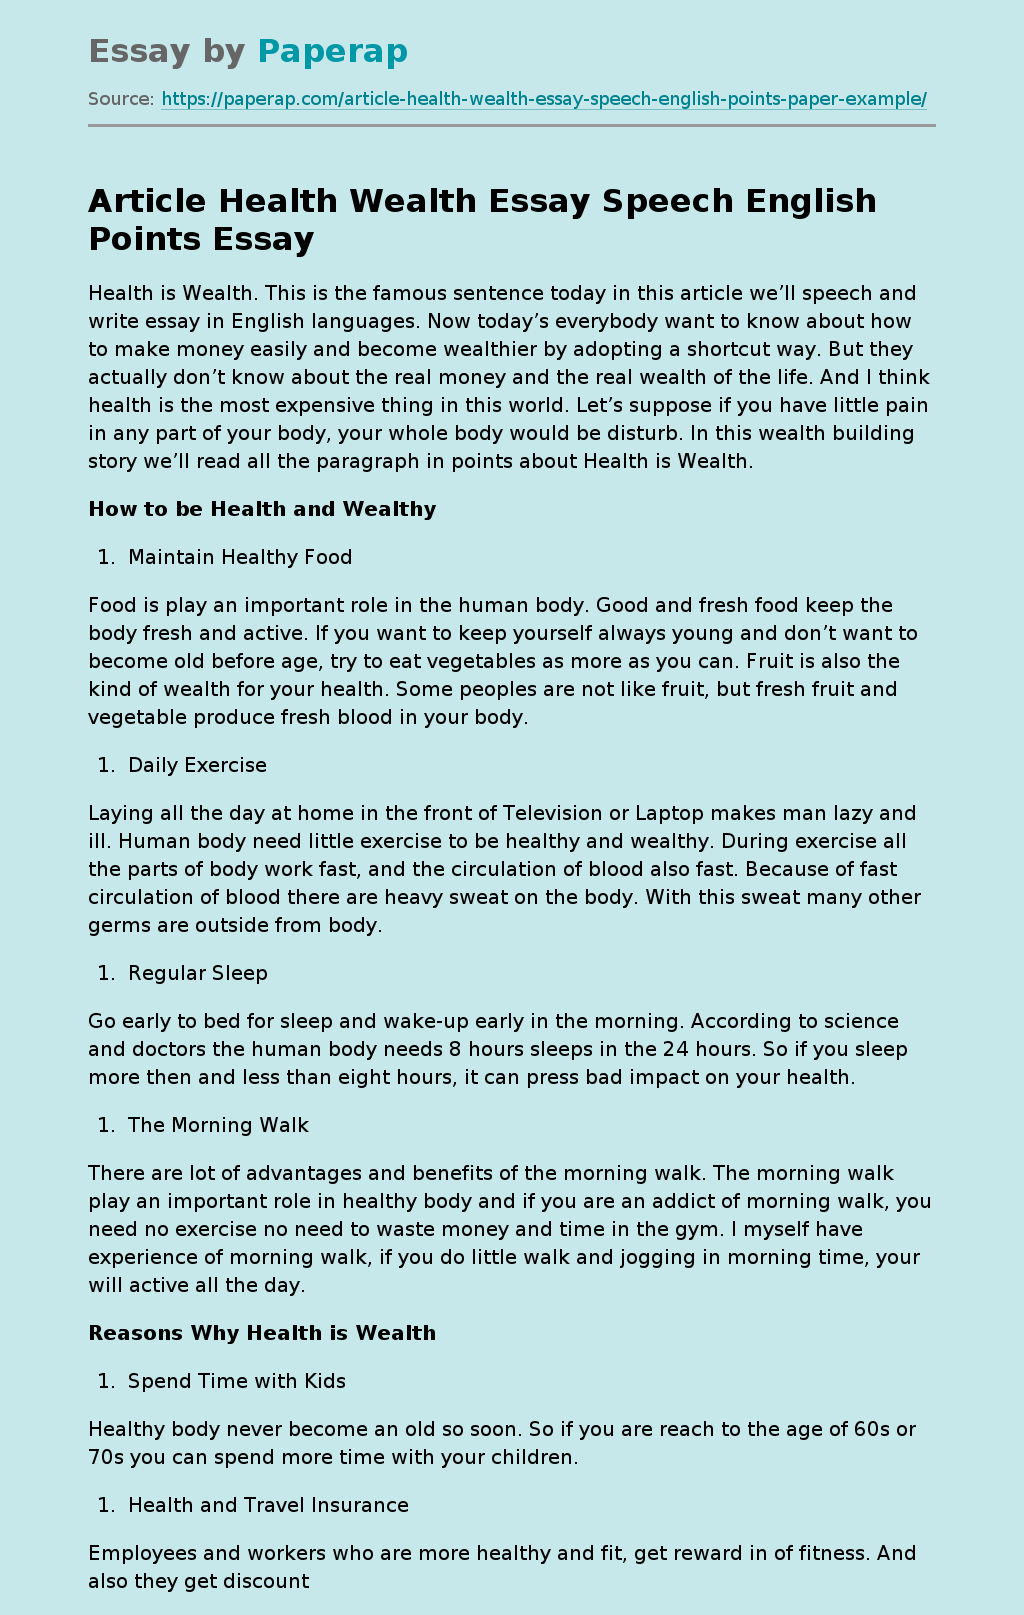 Article Health Wealth Essay Speech English Points